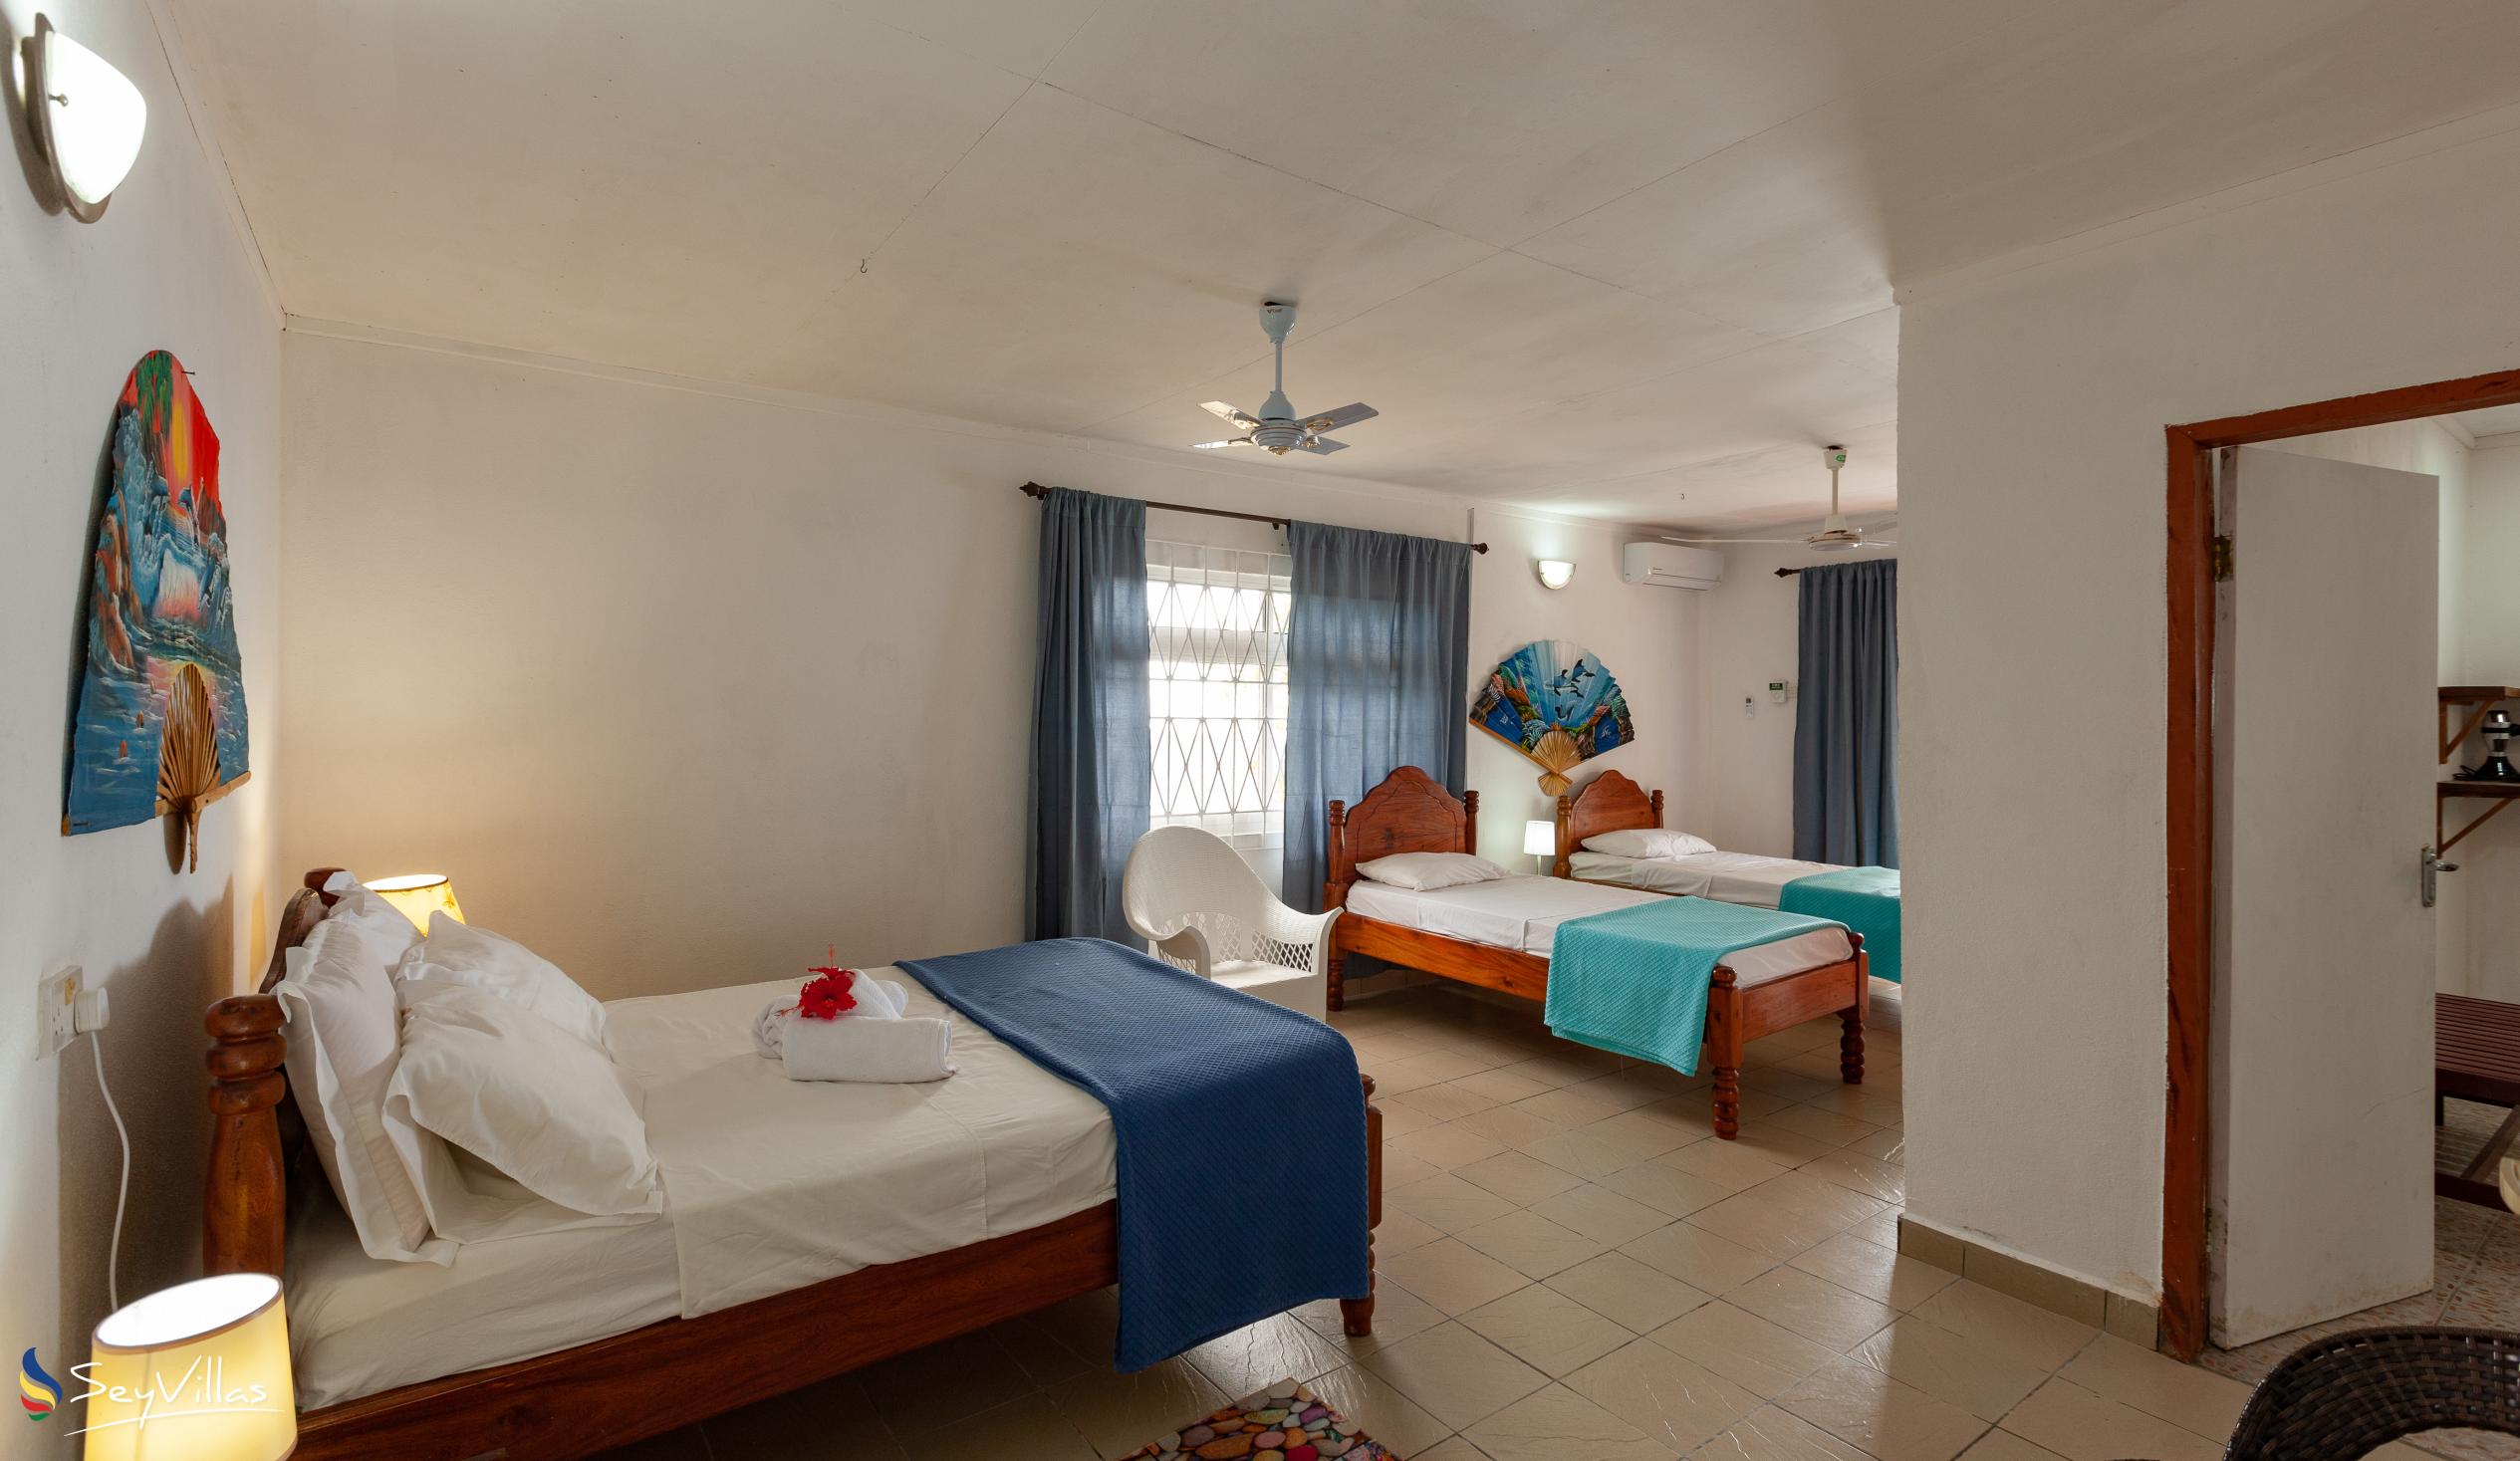 Photo 52: Maison du Soleil - 2-Bedroom Villa - Praslin (Seychelles)